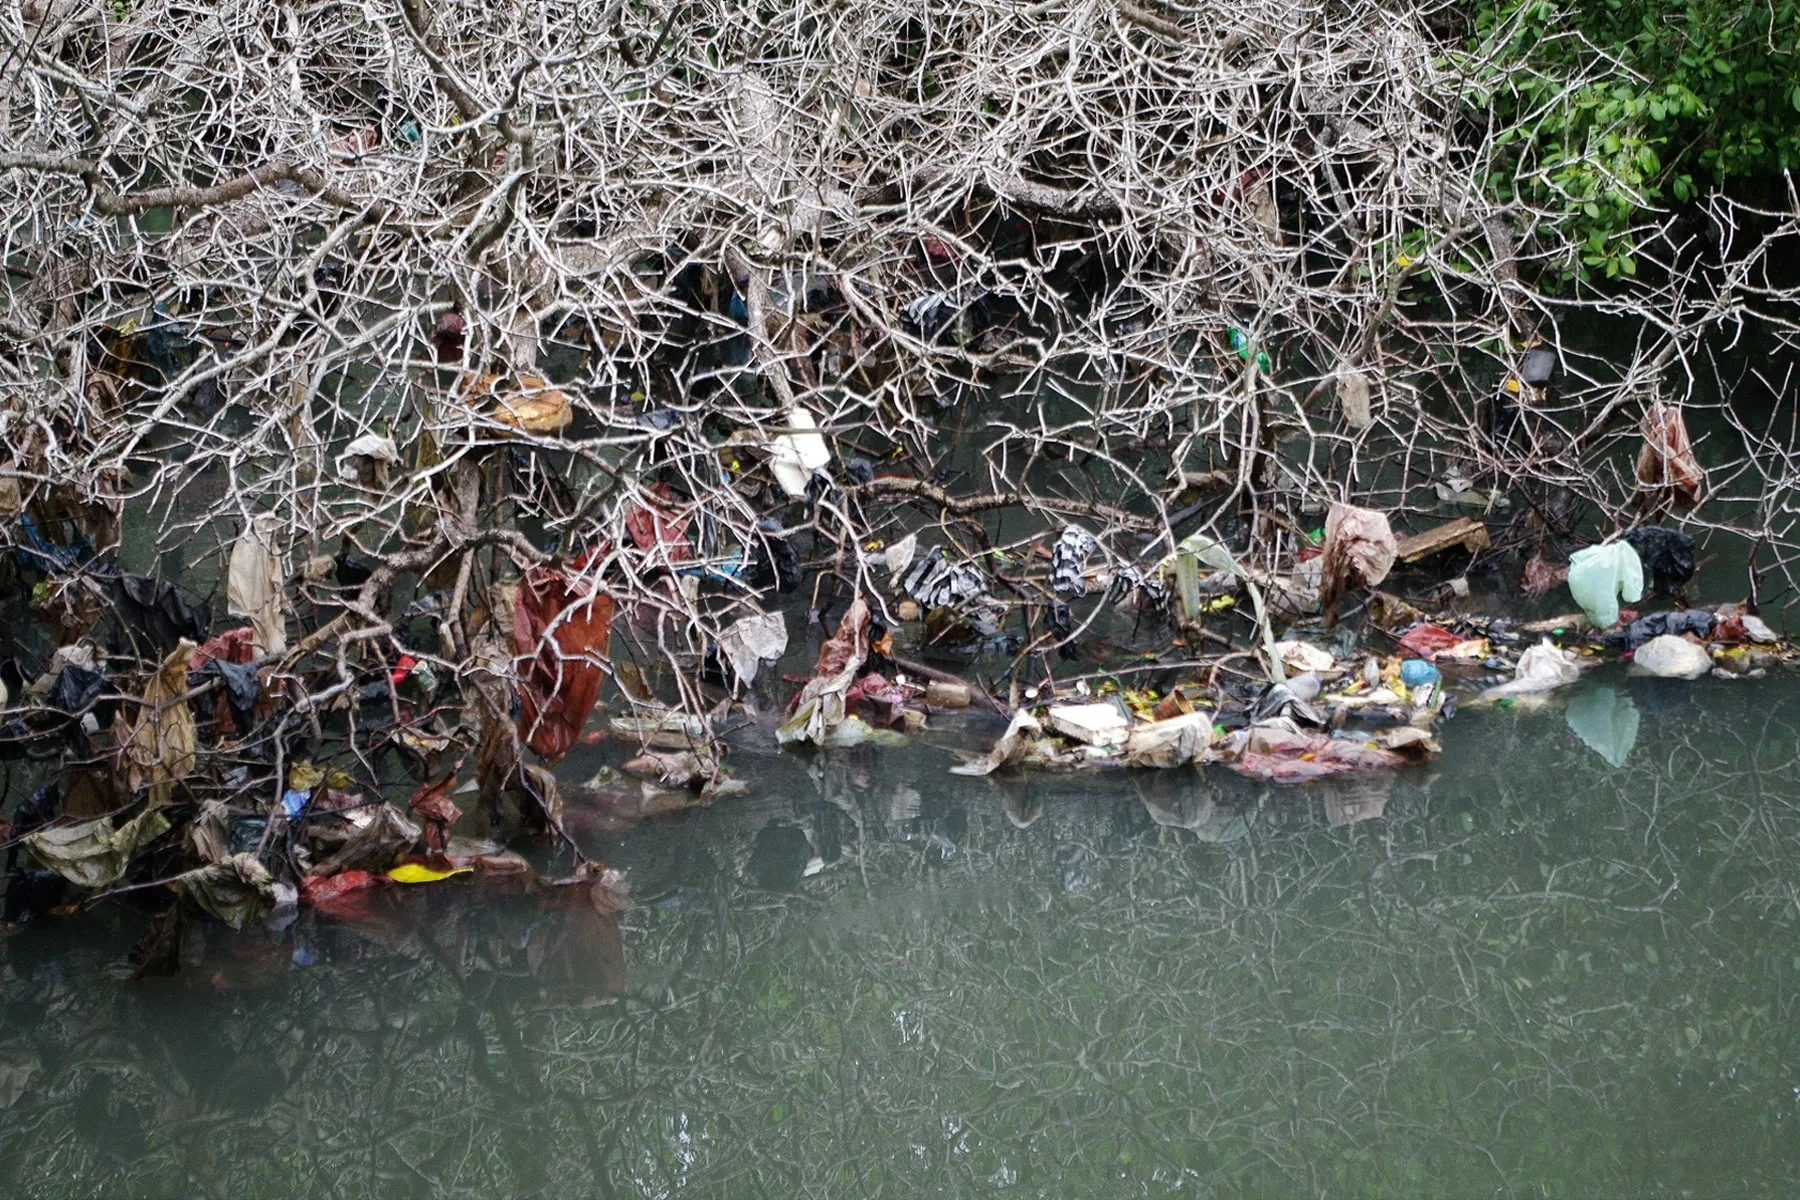 Plastic waste in Indonesia - mangroves in Bali